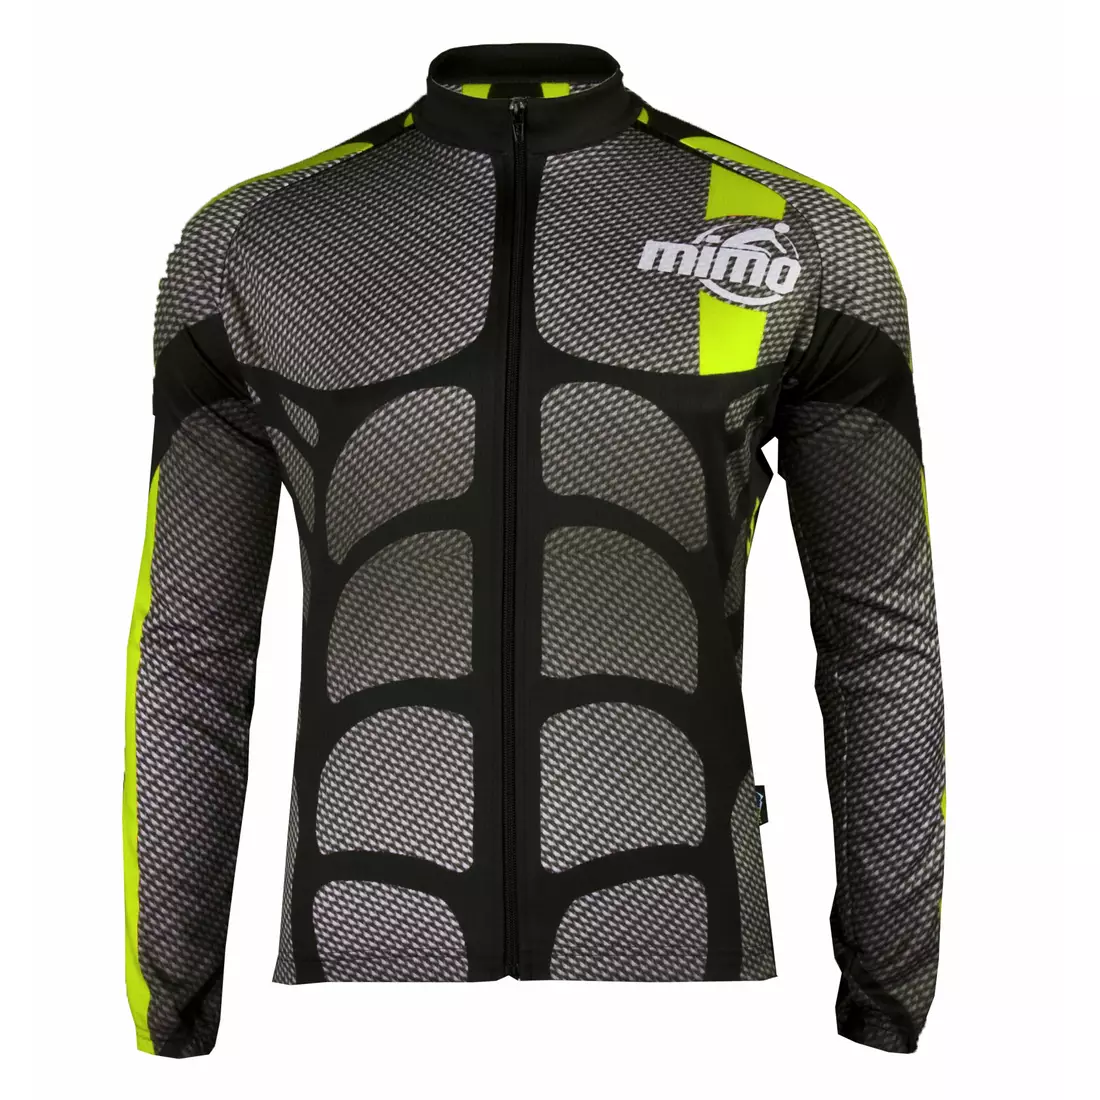 MikeSPORT DESIGN CARBON men's cycling sweatshirt, black and fluorine